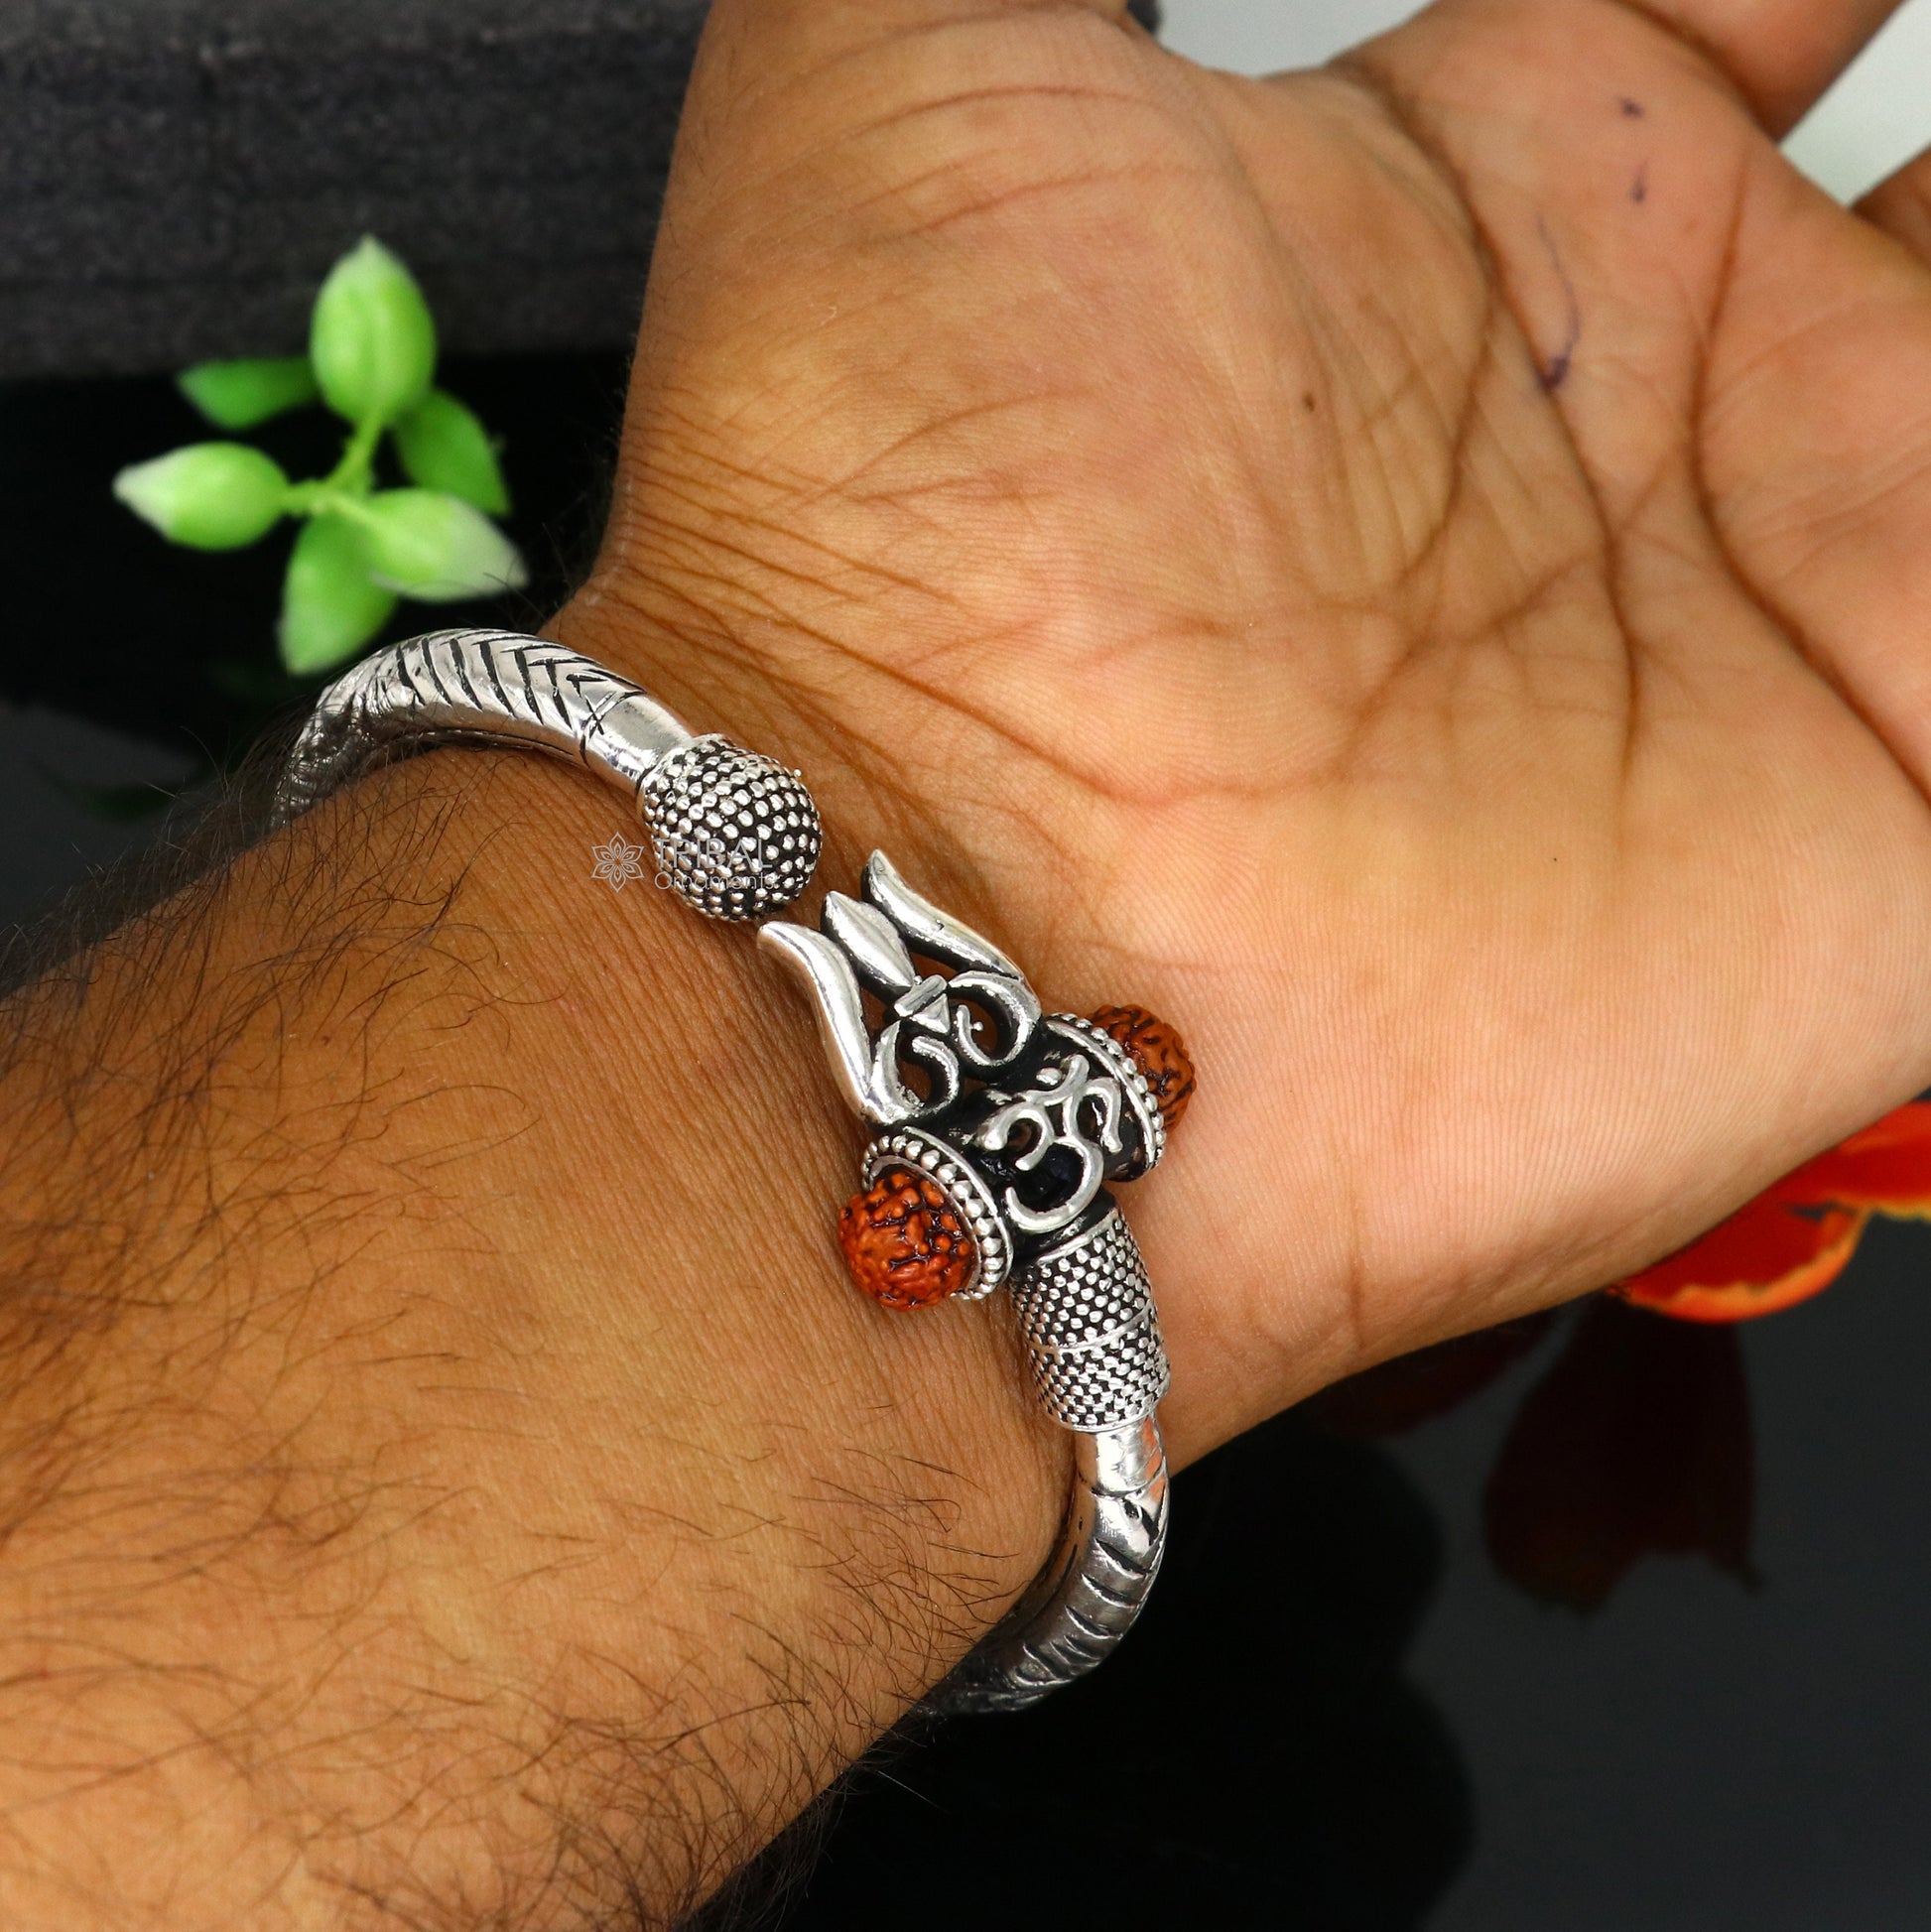 925 Sterling silver handmade Vintage style chitai work Lord Shiva trident trishul kada bangle bracelet with Rudraksha customized kada nsk761 - TRIBAL ORNAMENTS